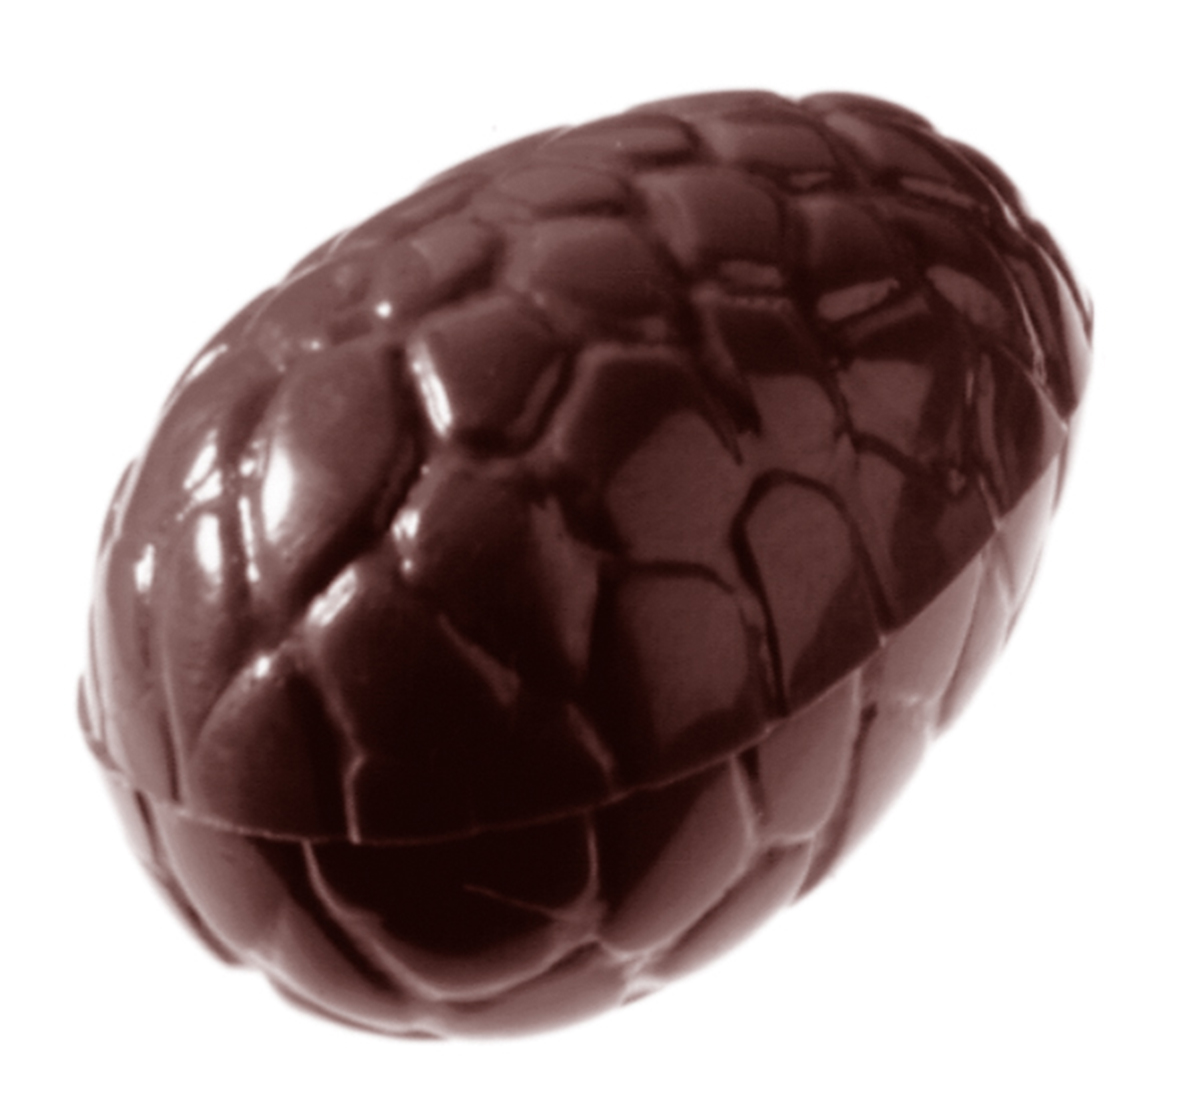 Professionel chokoladeform i polycarbonat - Egg kroko 3,5 cm CW1537